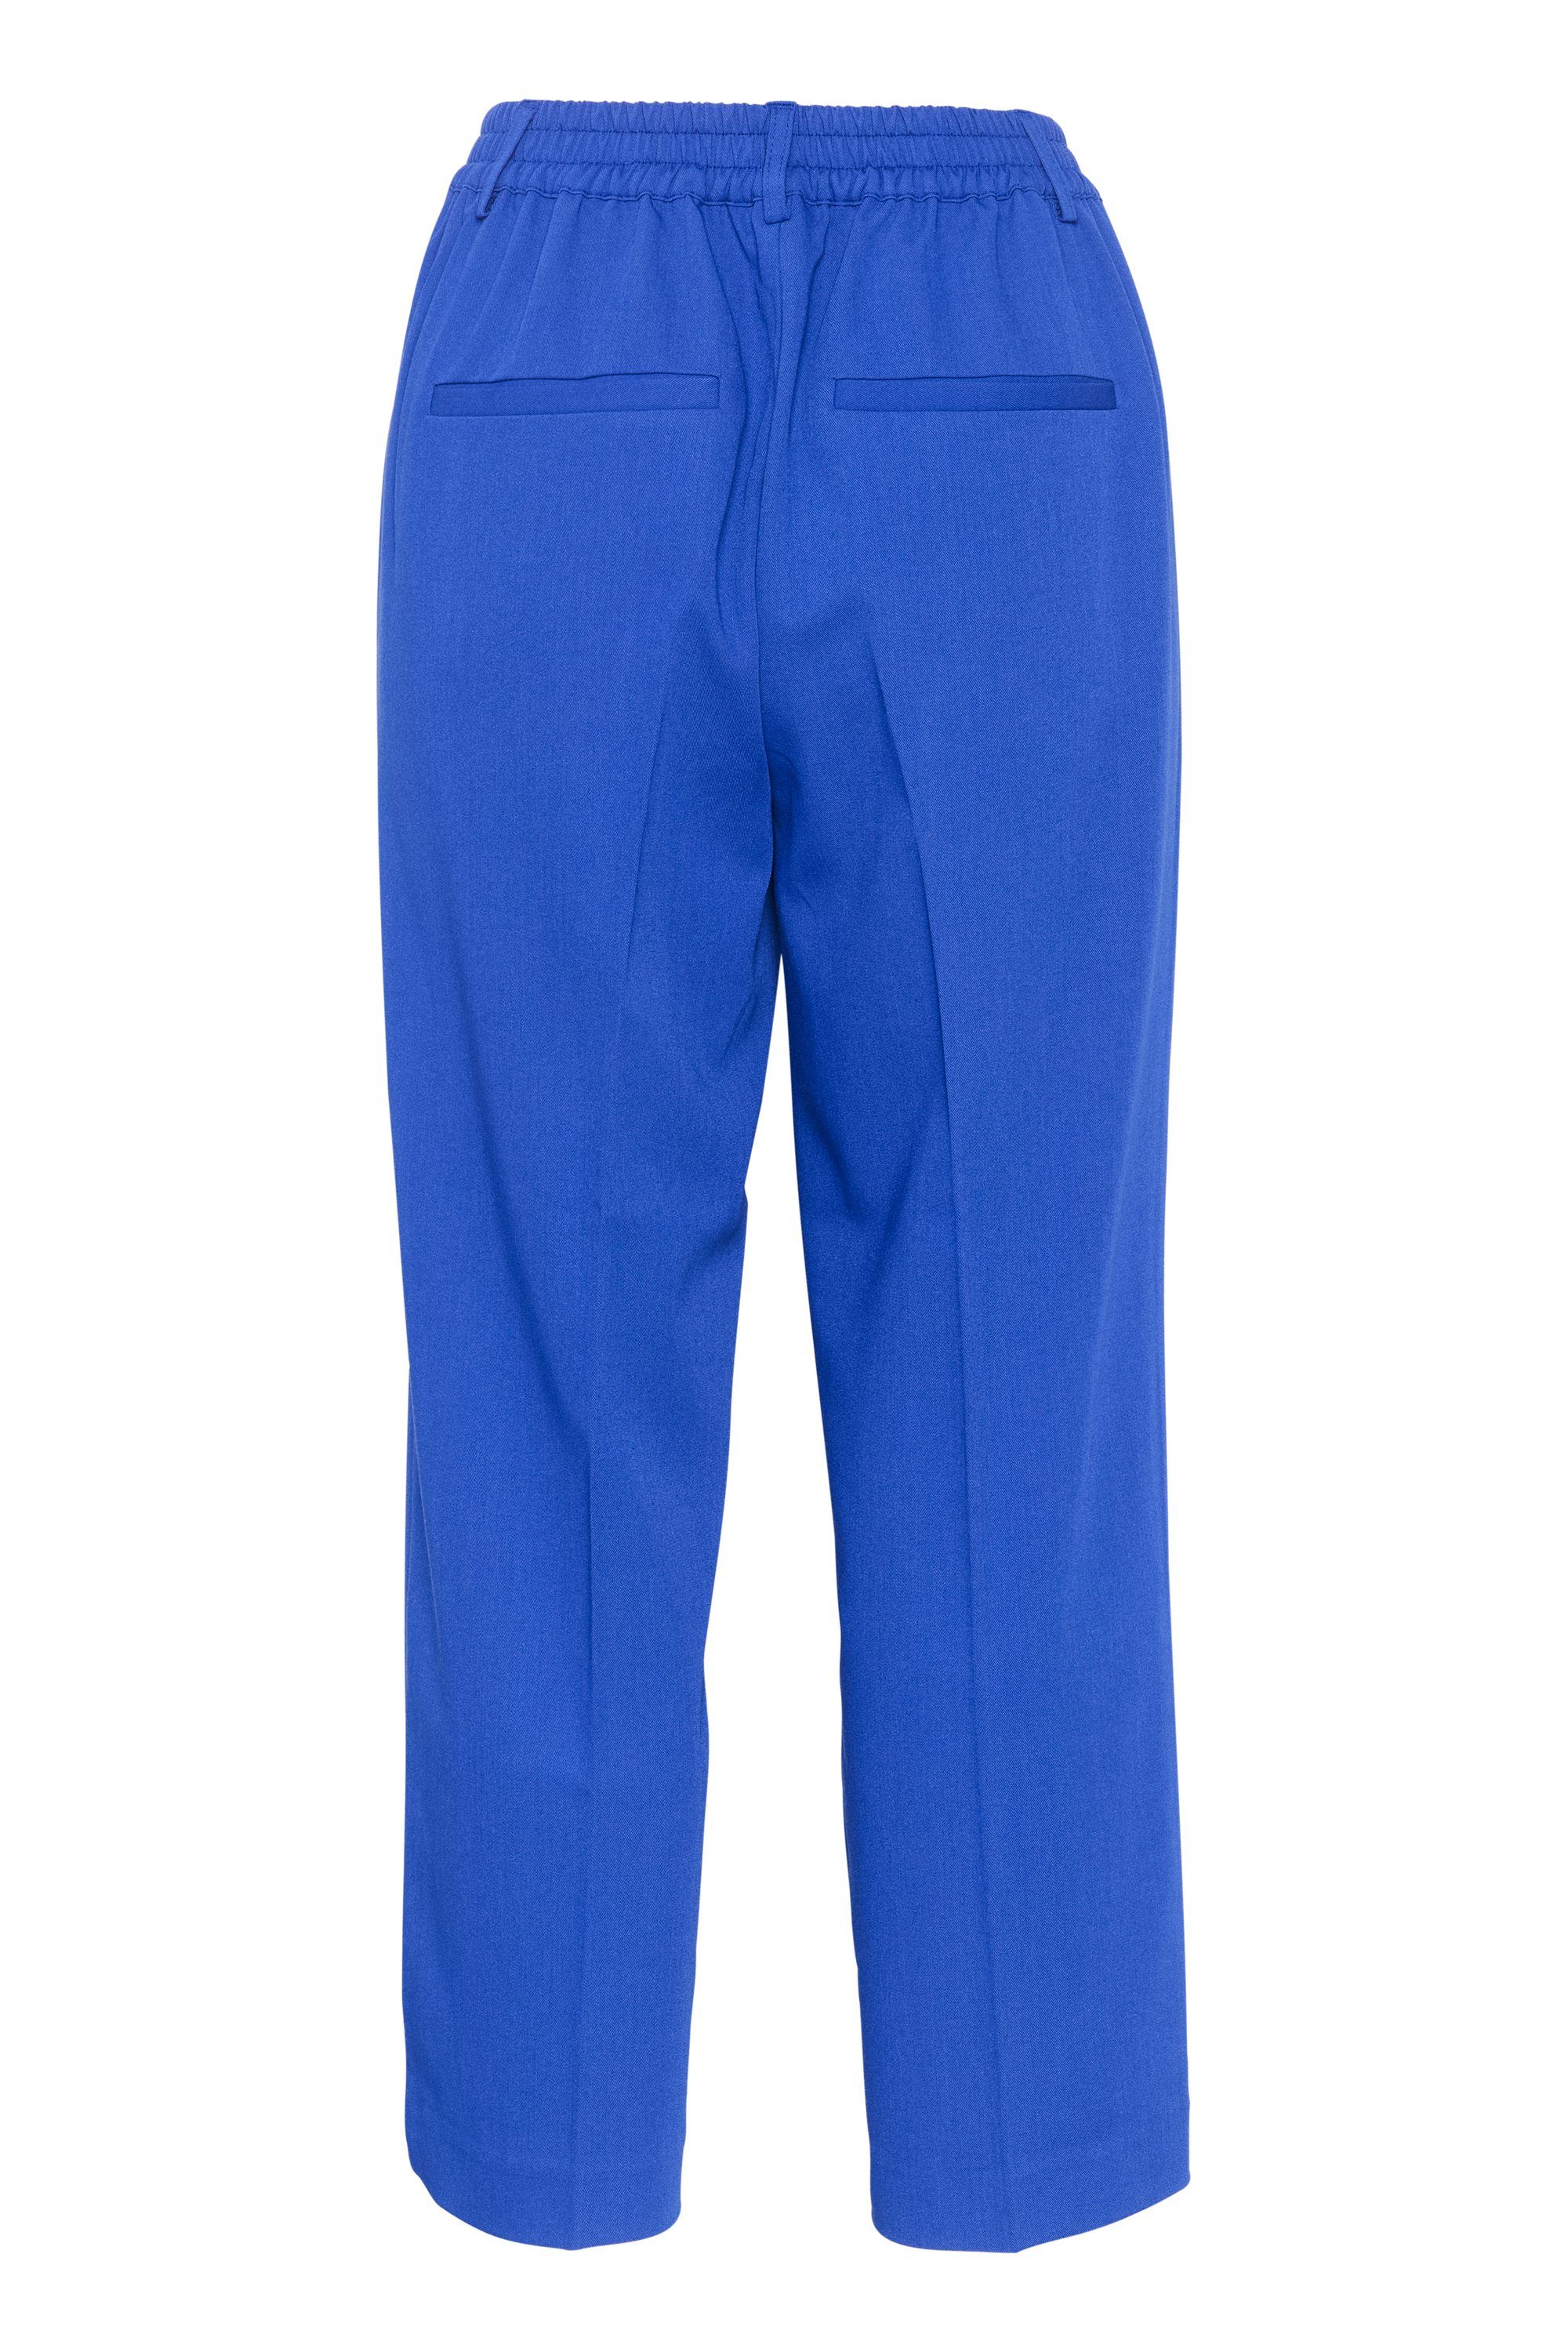 Suiting Blue Clematis KAFFE KAsakura Pants Anzughose